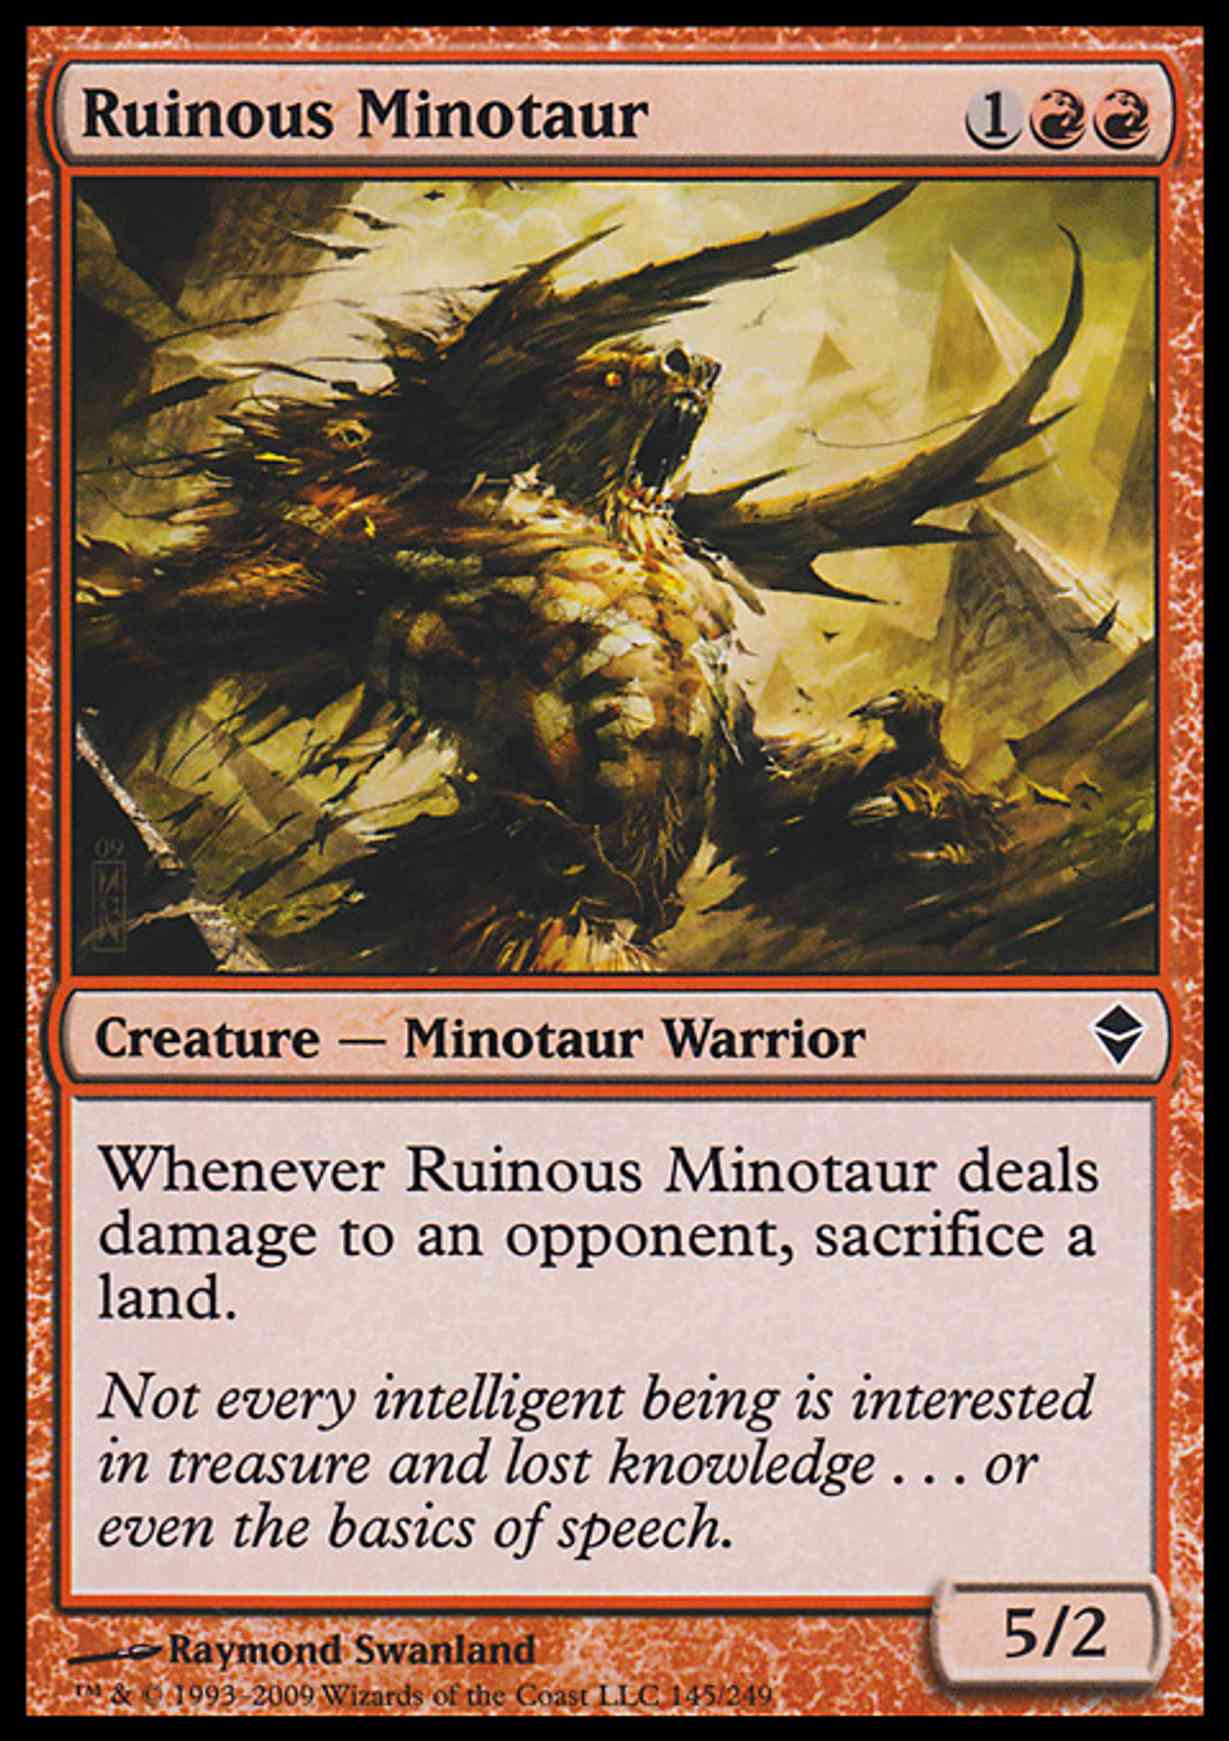 Ruinous Minotaur magic card front